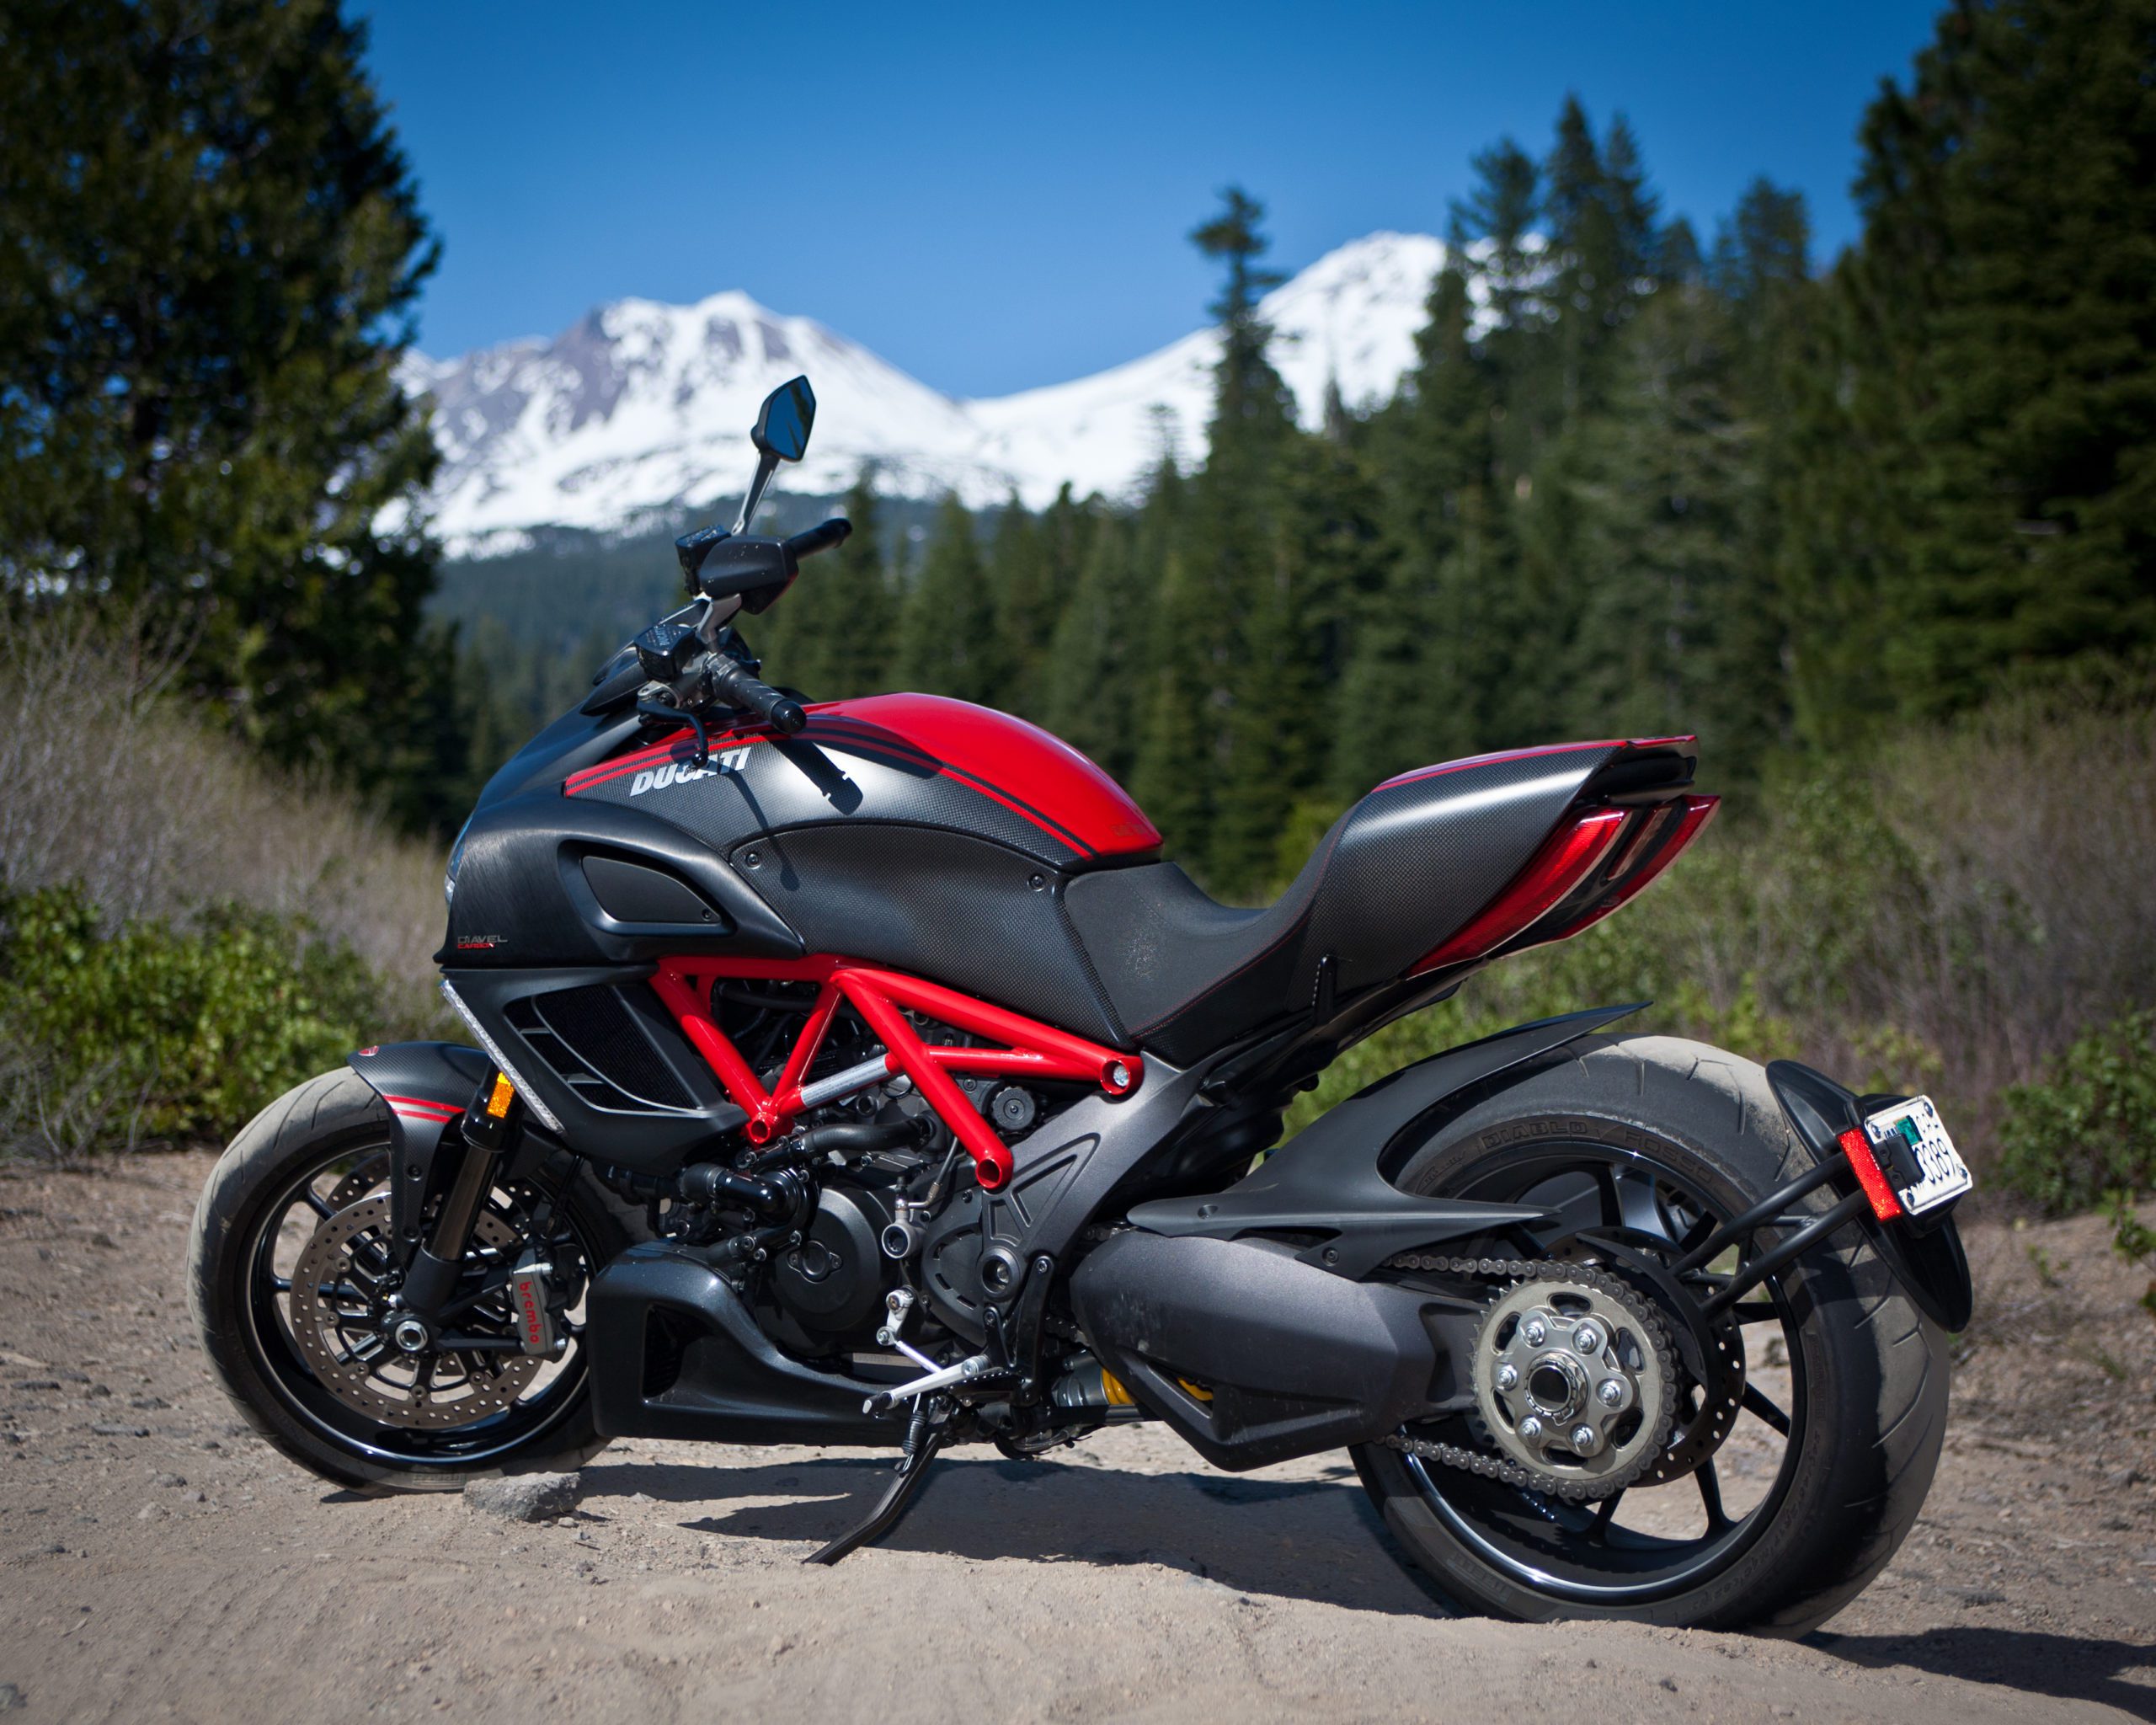 Ducati Diavel | Motorcycle USA-3079 | Mount Shasta Ca